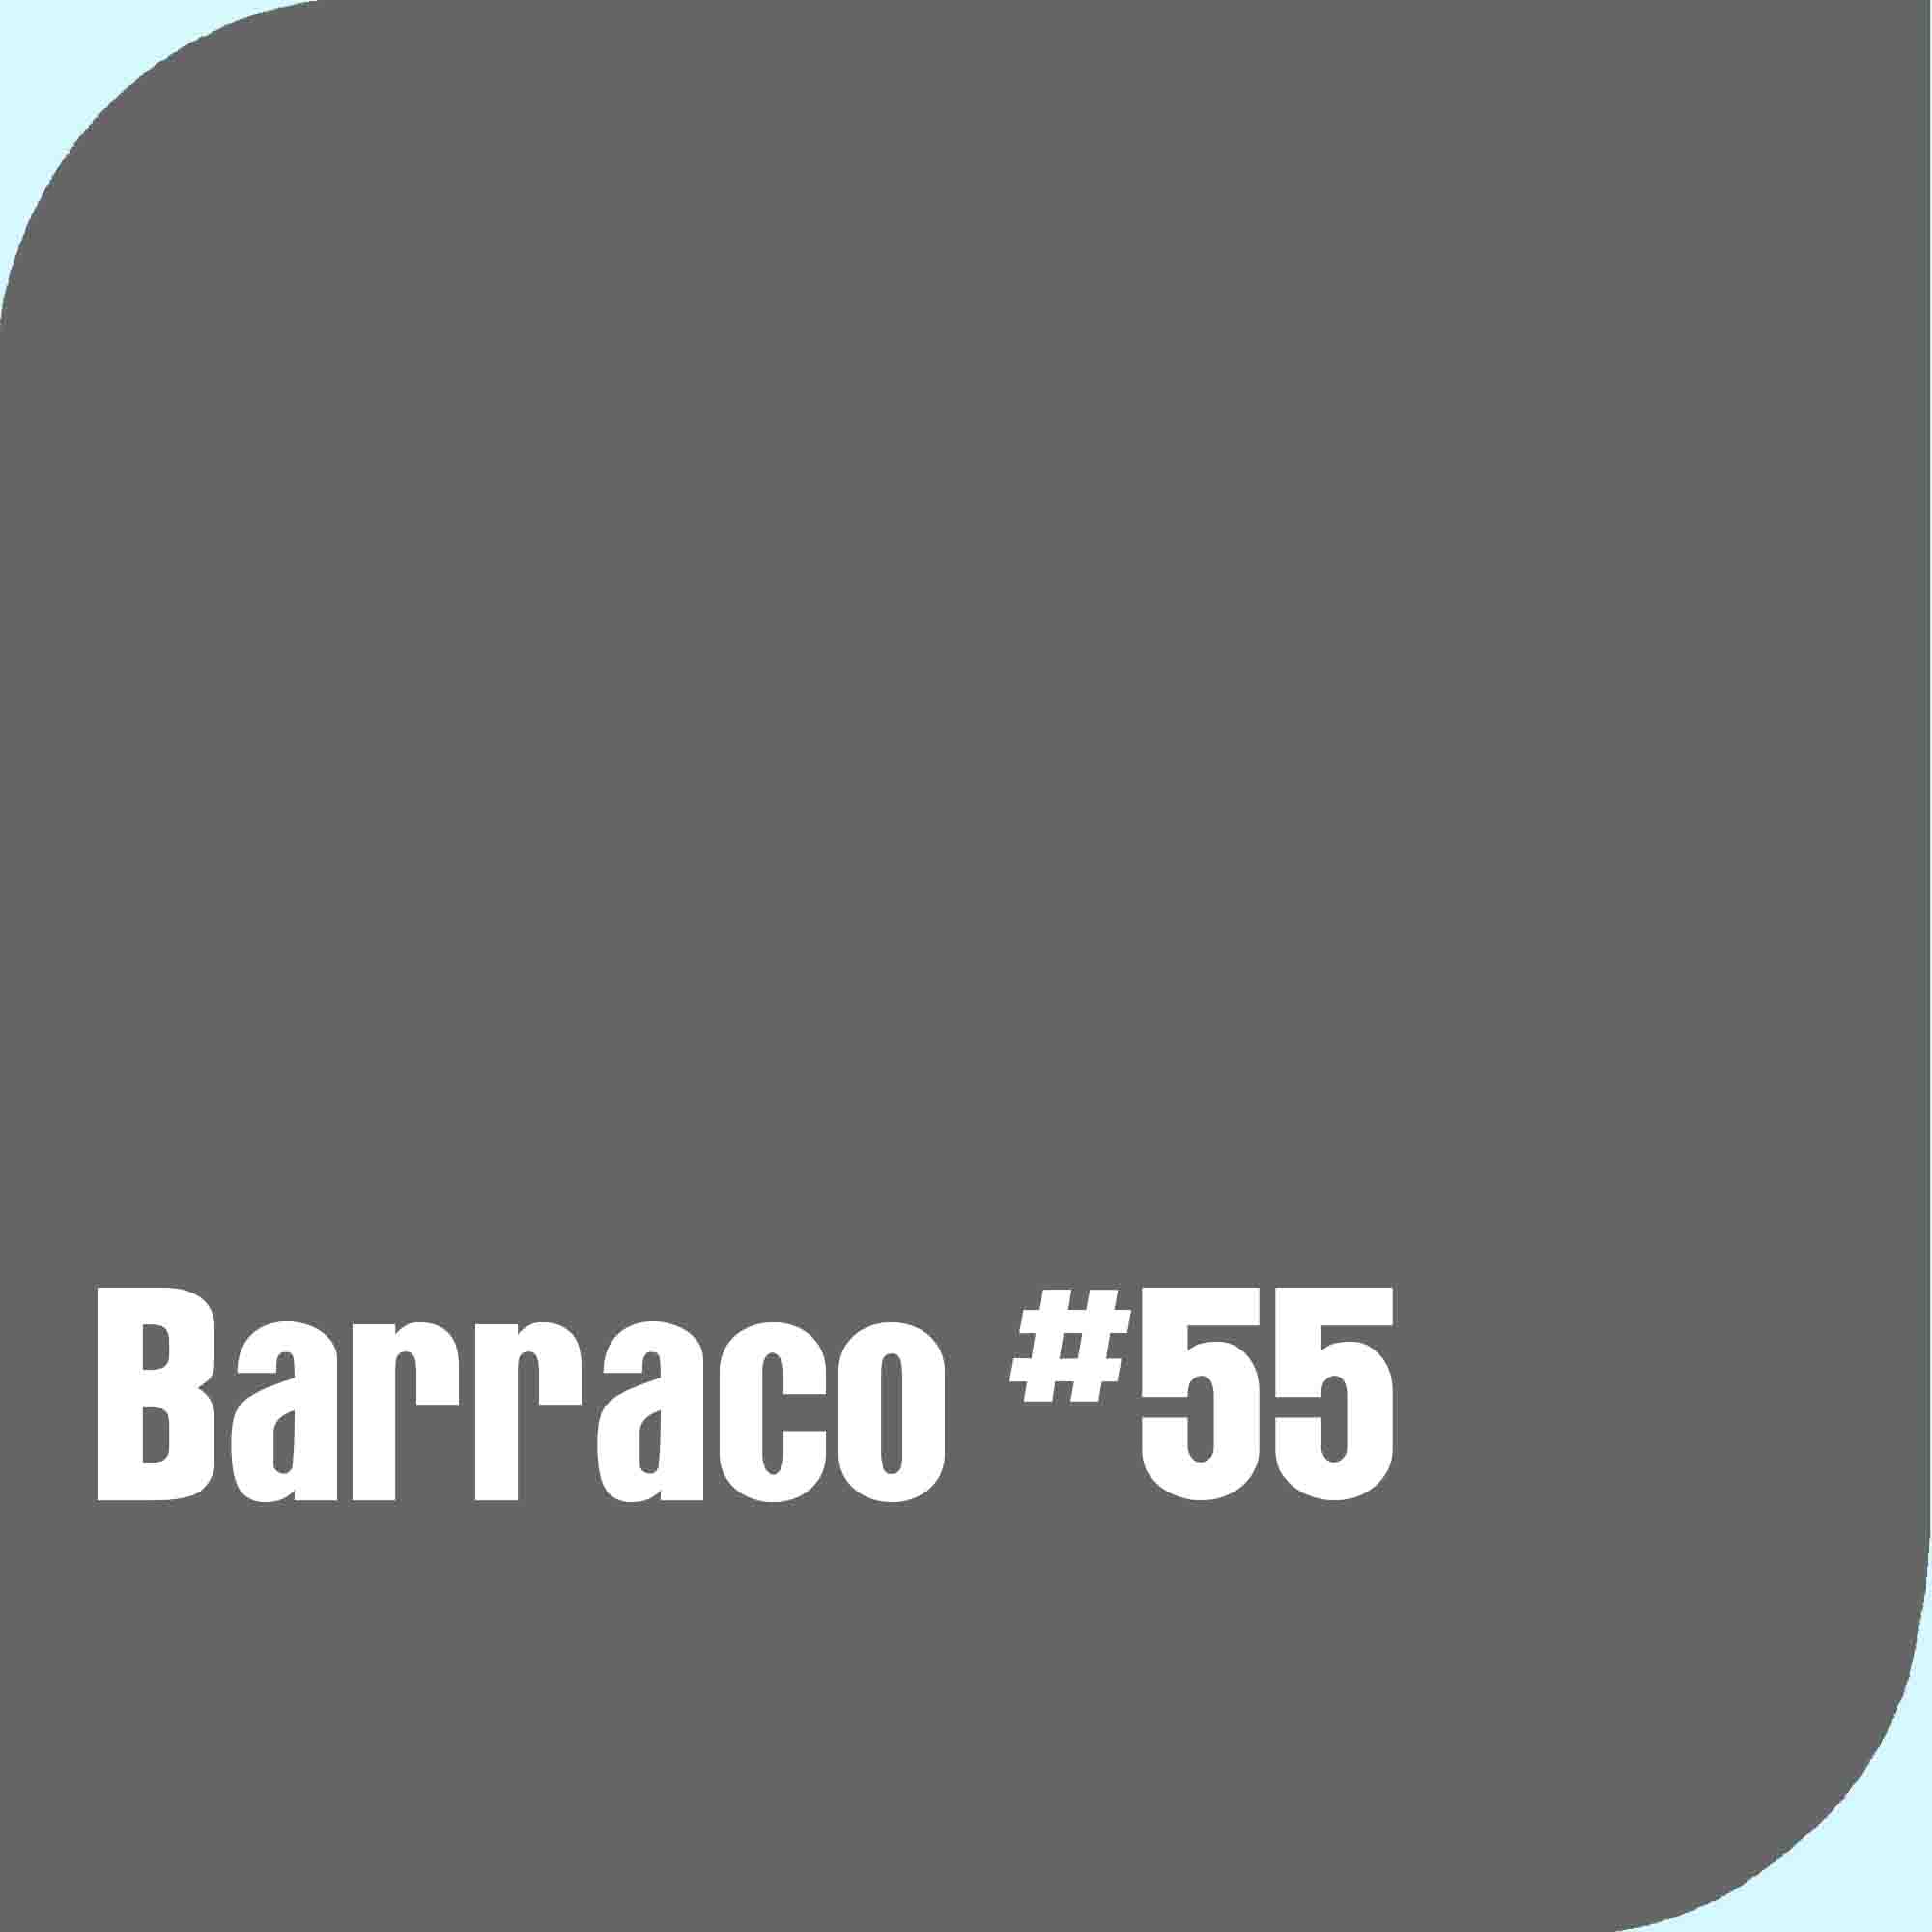 Barraco #55